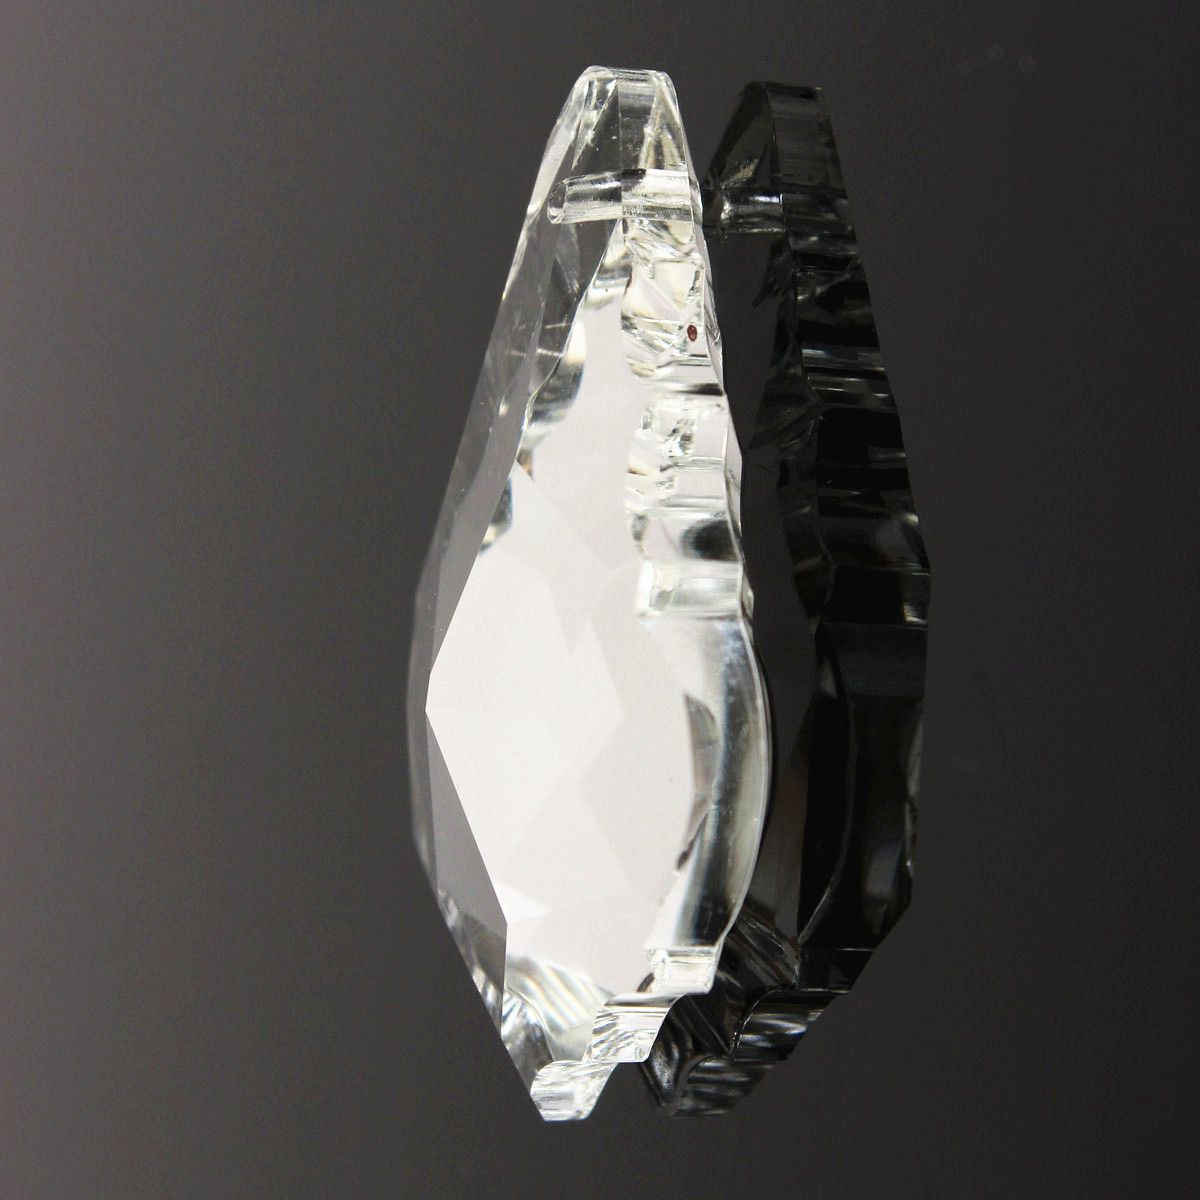 38MM-Chandelier-Clear-Crystal-Glass-Maple-Leaf-Pendant-Lamp-Prisms-Part-Decor-1066405